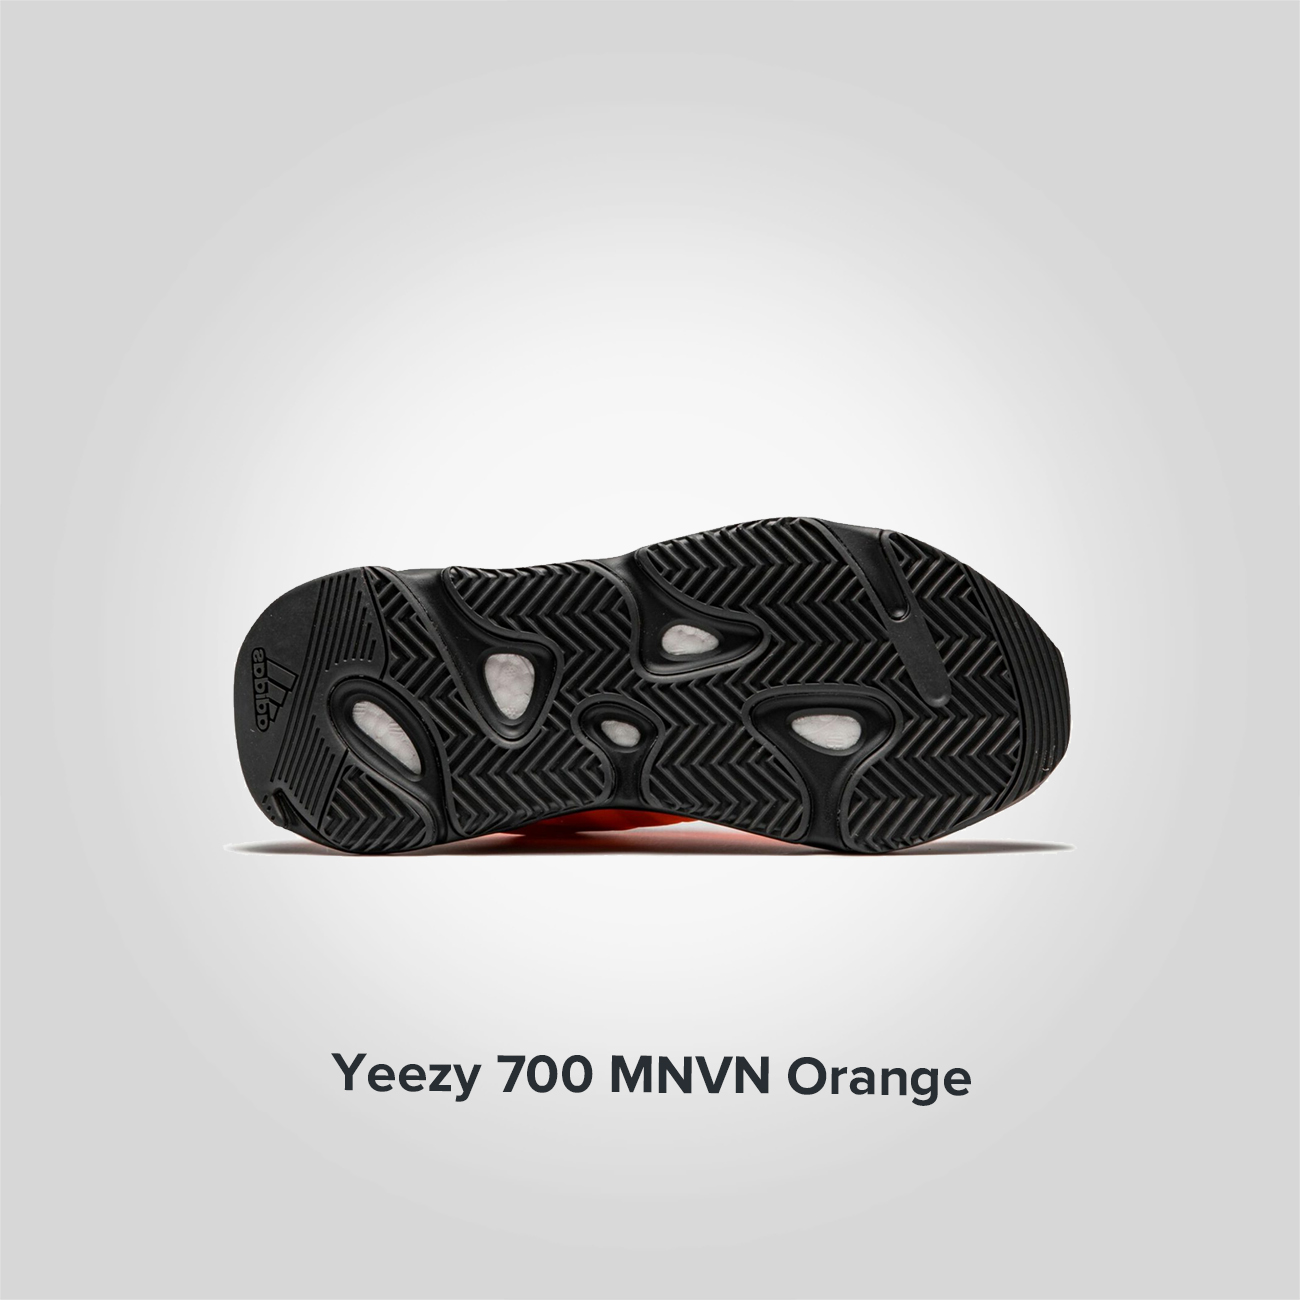 Yeezy Boost 700 MNVN Orange